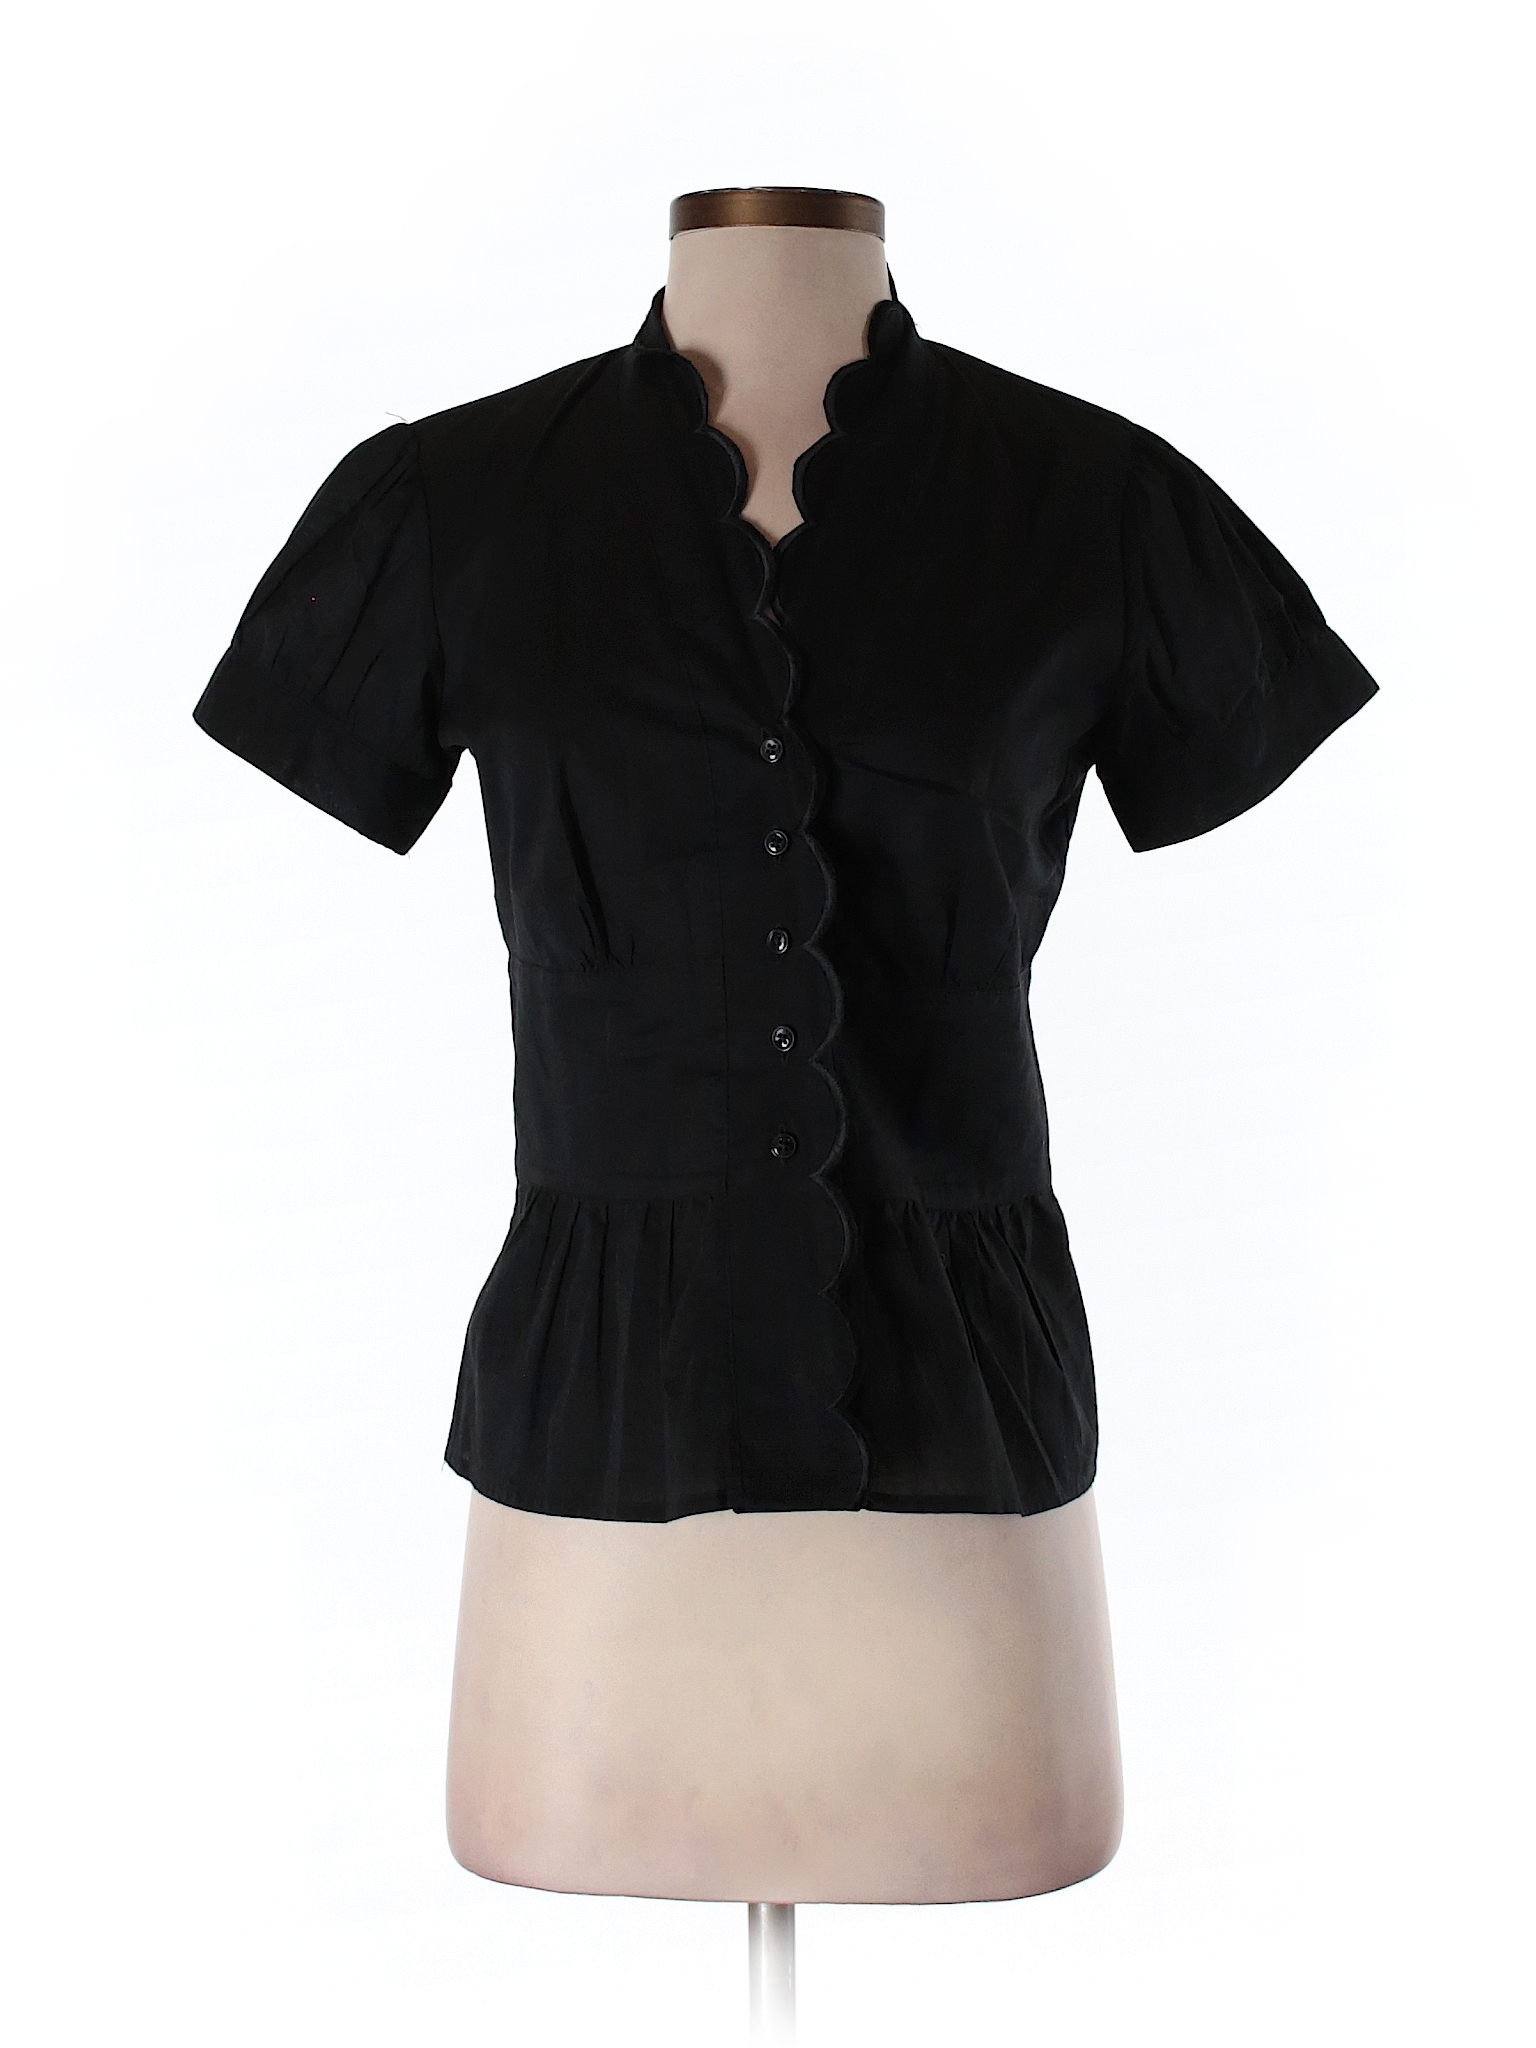 Isaac Mizrahi 100% Cotton Solid Black Short Sleeve Top Size S - 83% off ...